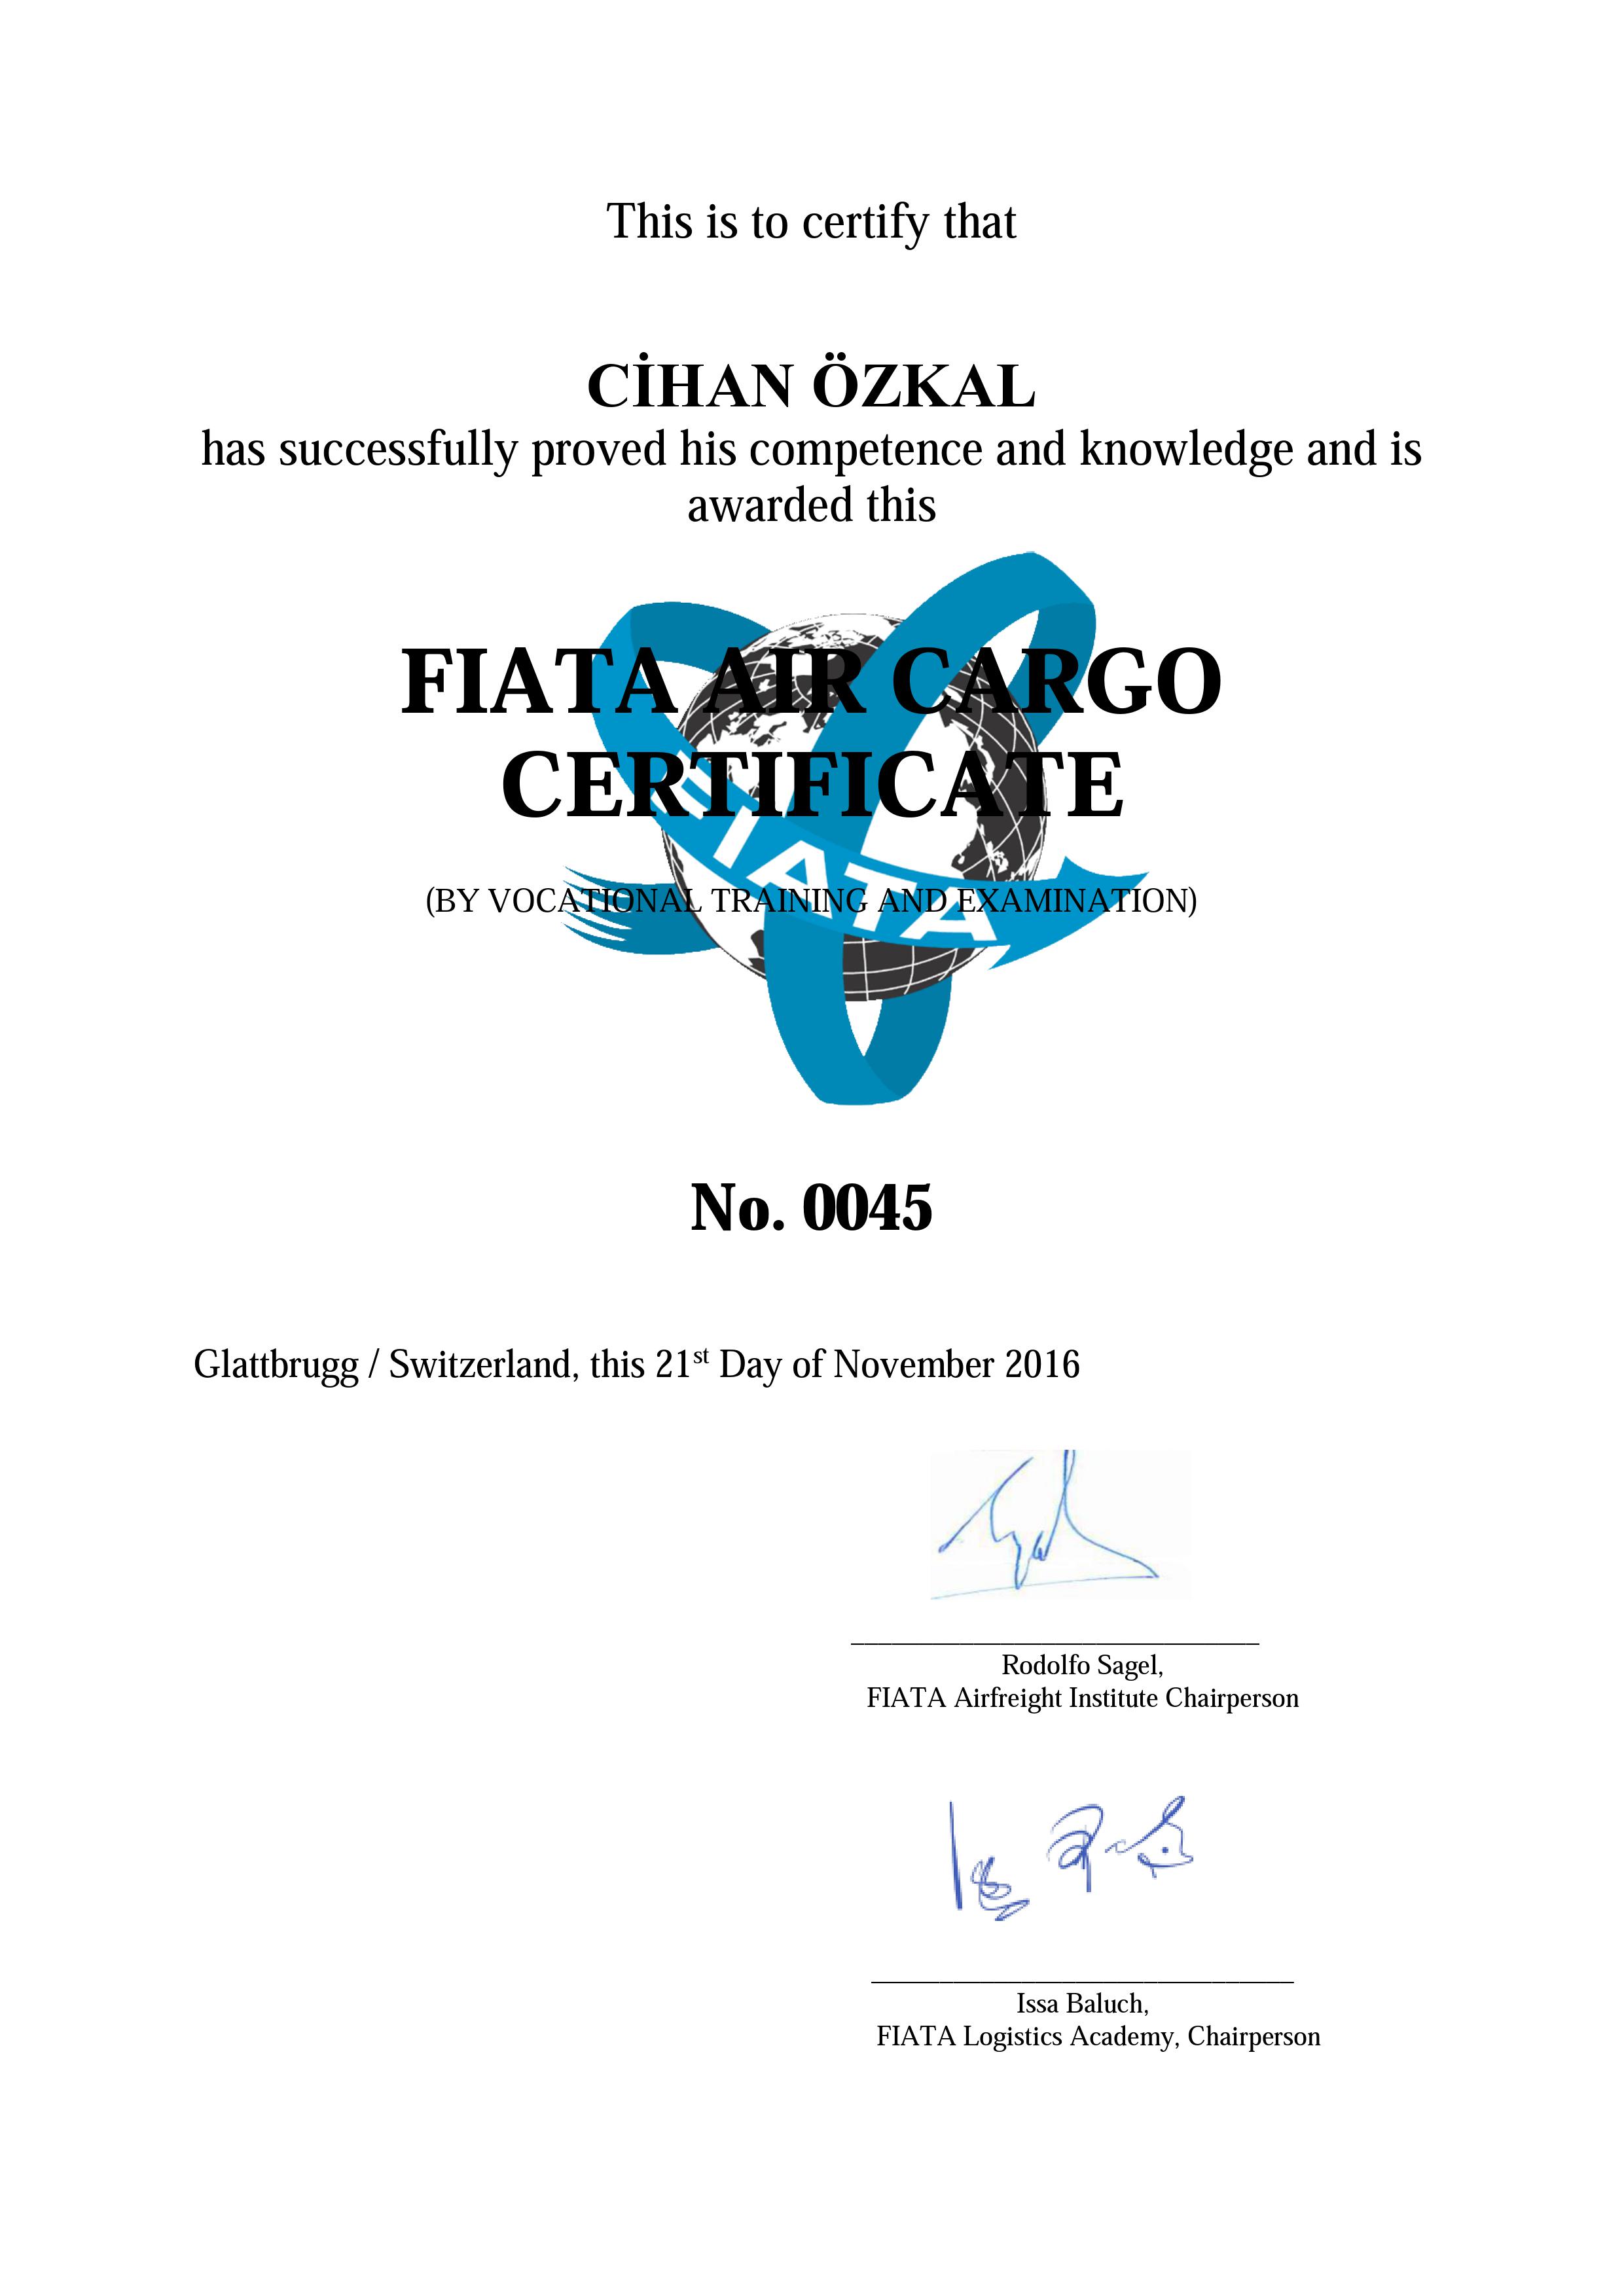 FIATA Air Cargo Certificate Cihan Ozkal